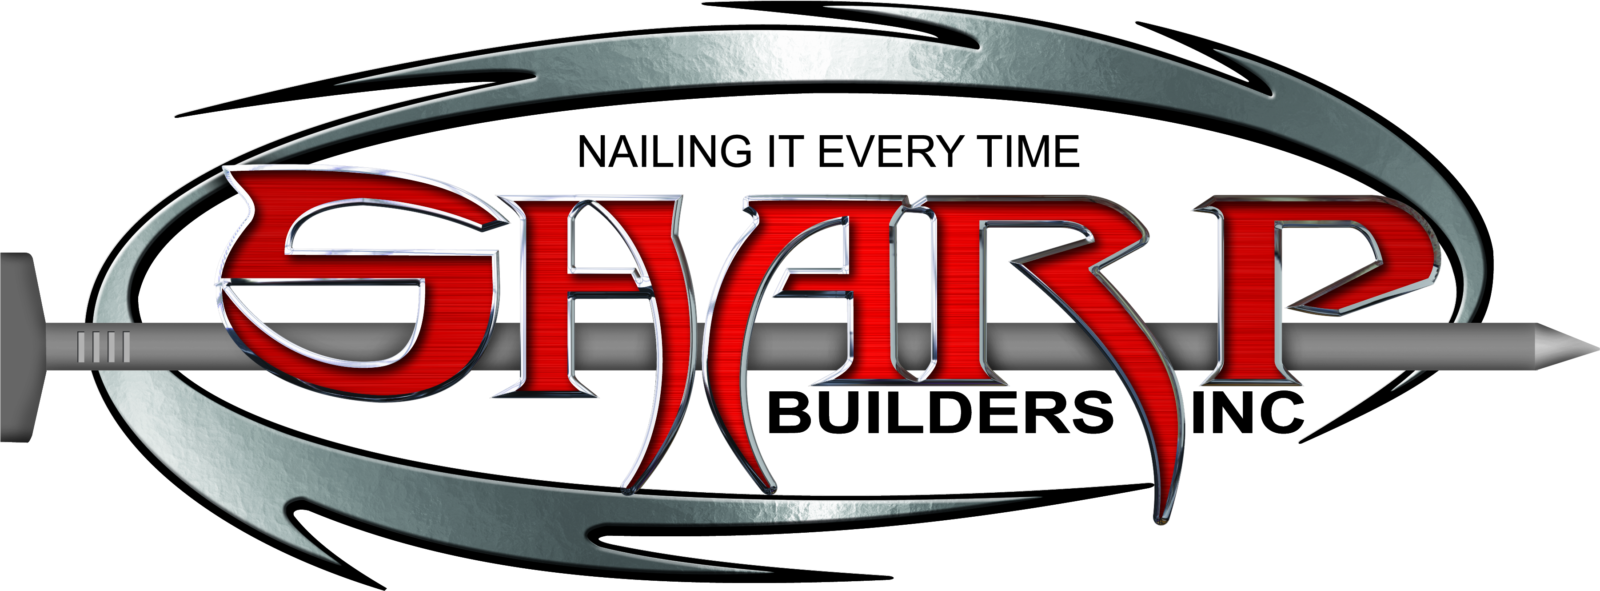 Sharp Builders, Inc. Logo